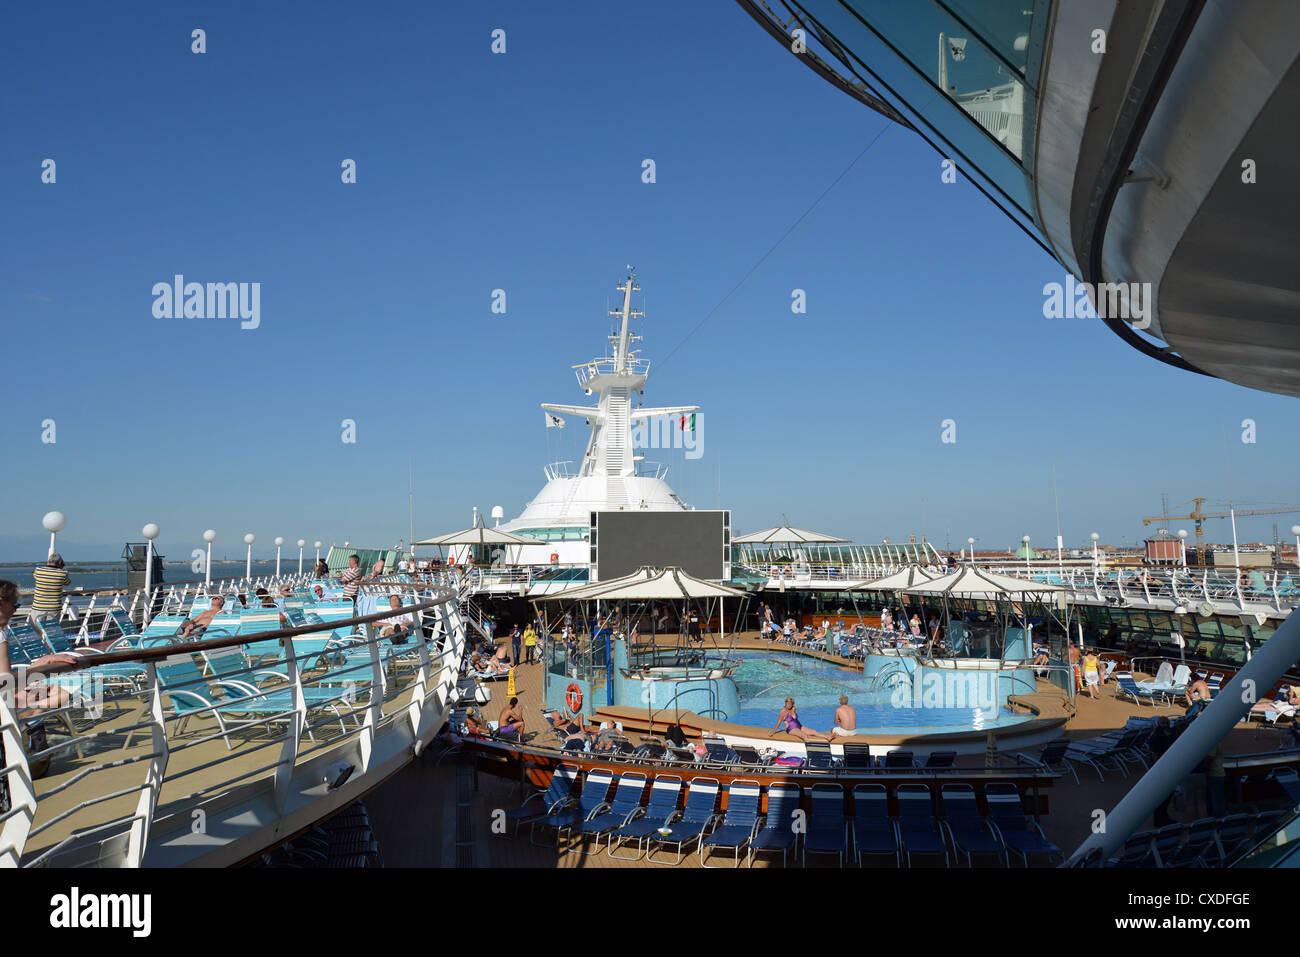 Sonnenbaden am Sonnendeck auf Royal Caribbean "Grandeur of the Seas" Passagiere Kreuzfahrtschiff, Adria, Mittelmeer, Europa Stockfoto